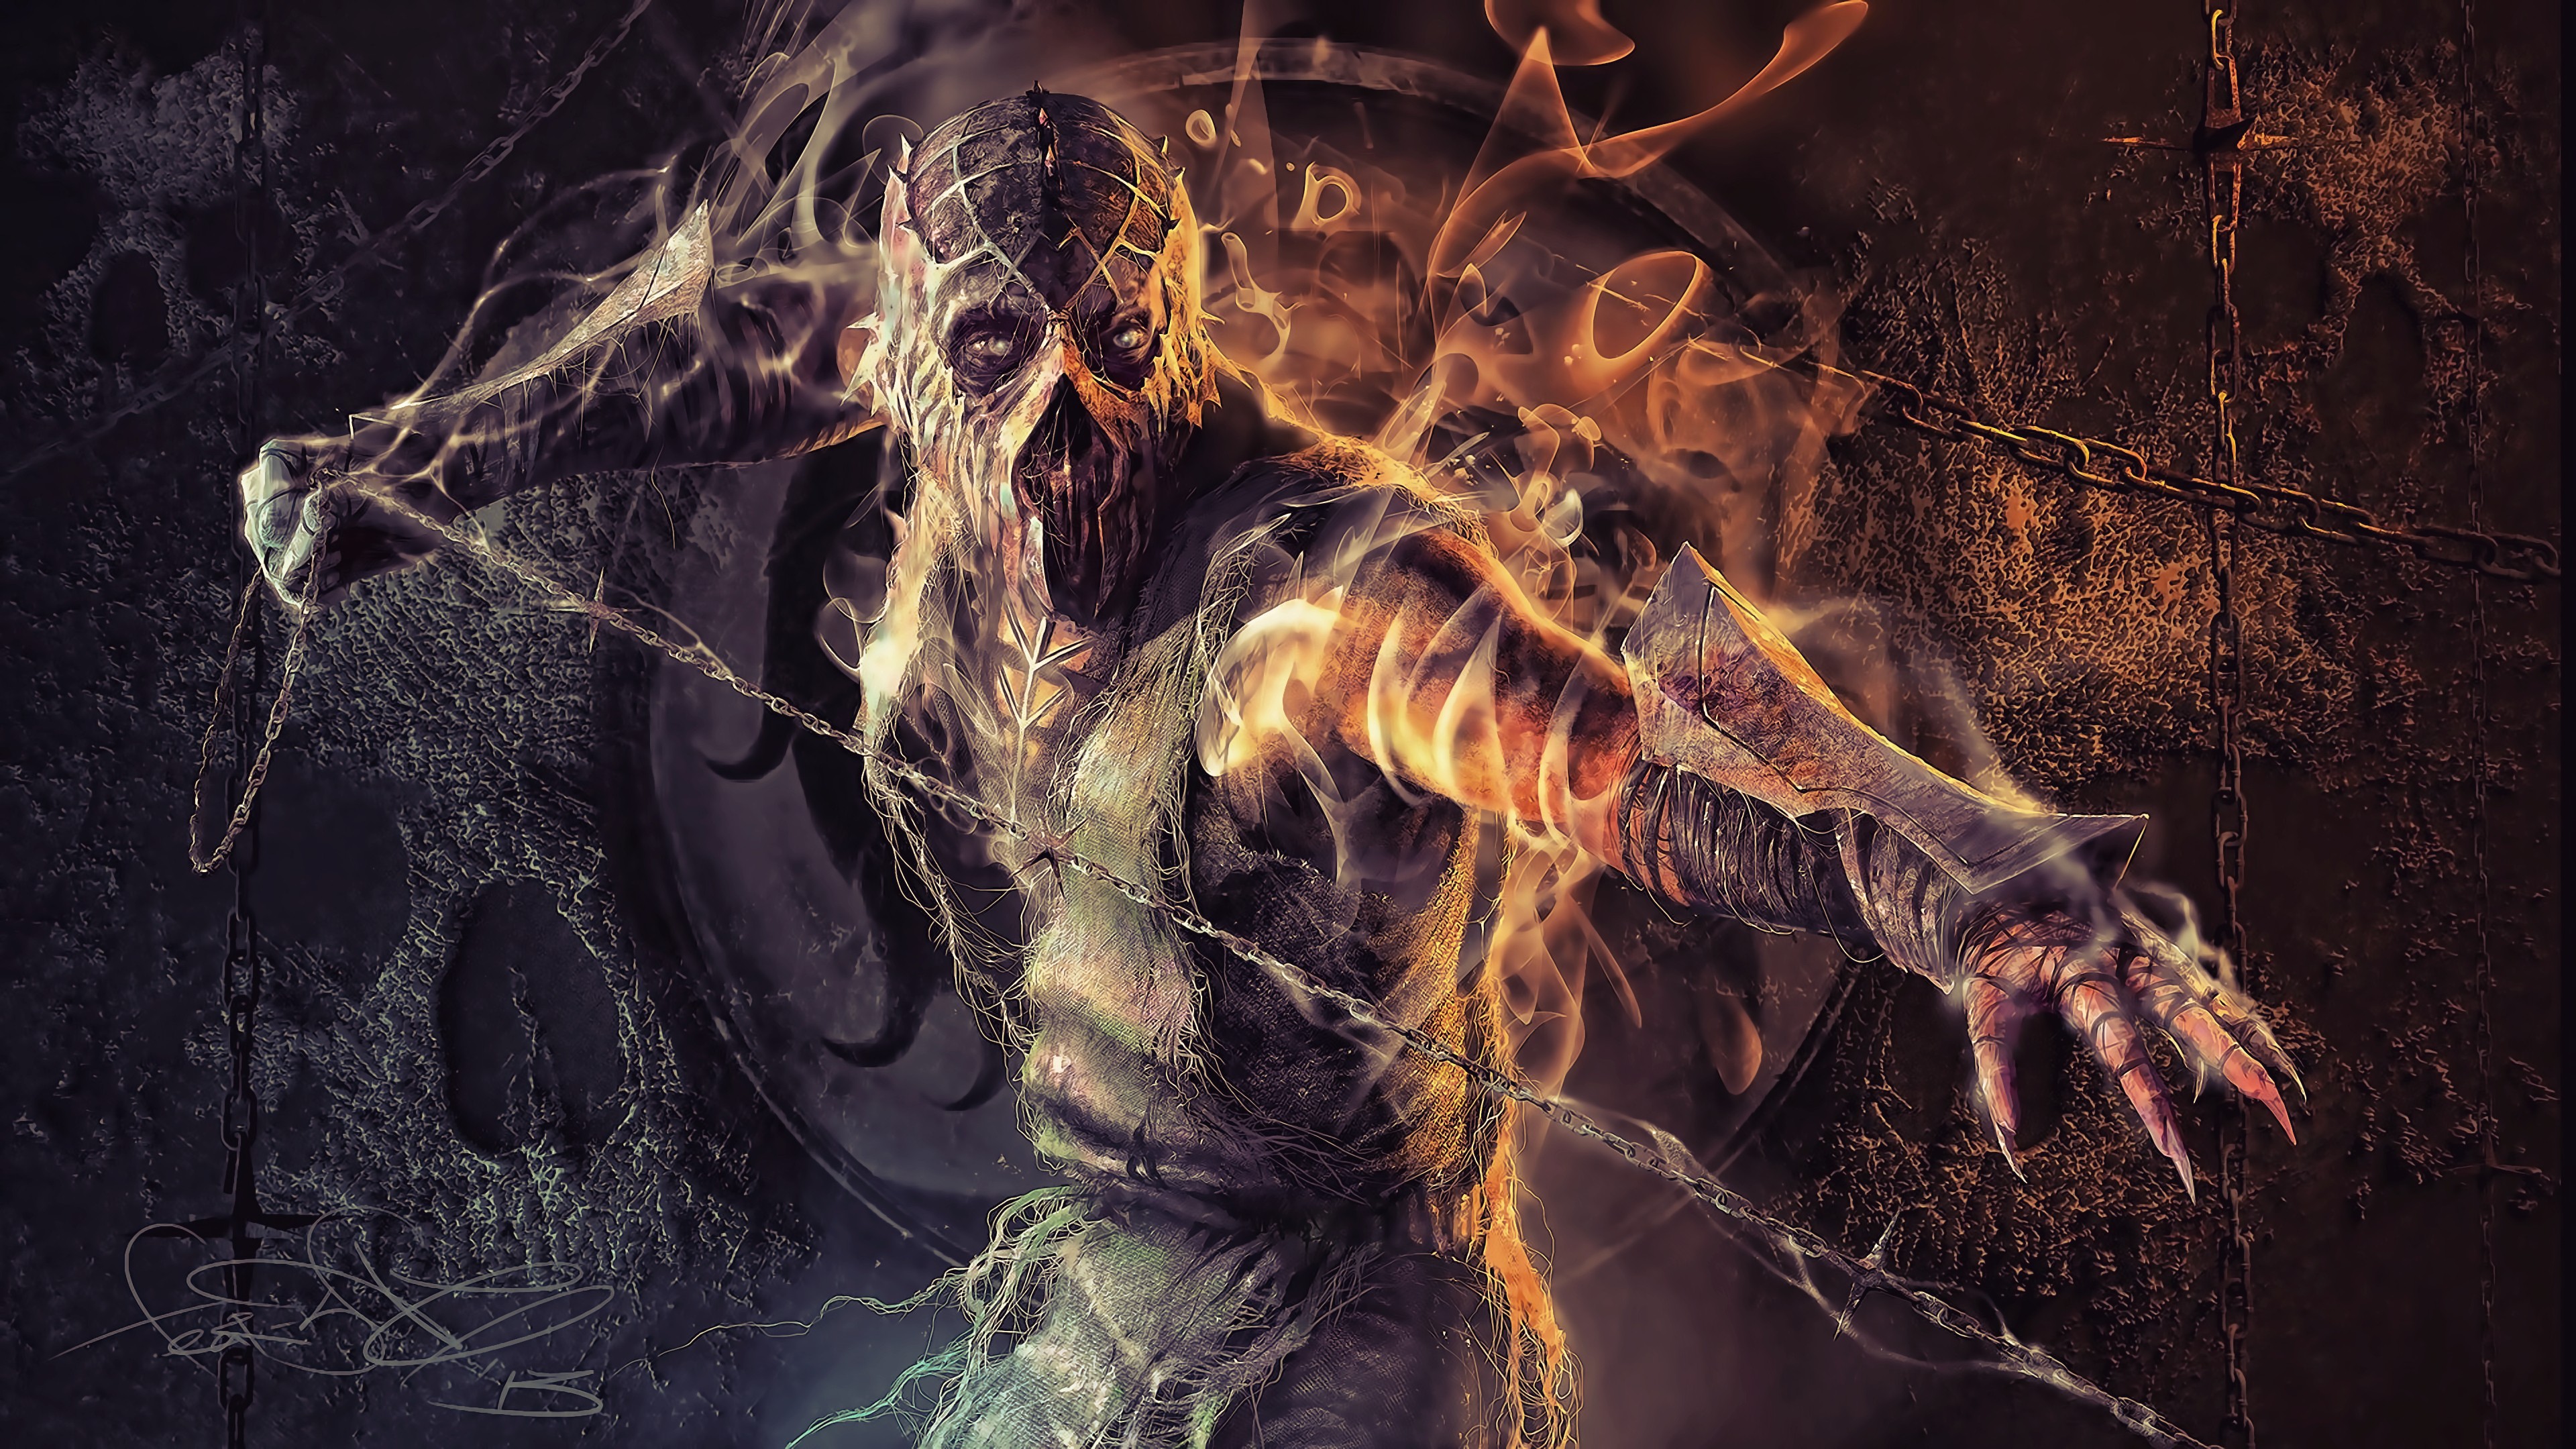 Mortal Kombat Artwork Video Games Fantasy Art Warrior Digital Art Chains Scorpion 3840x2160